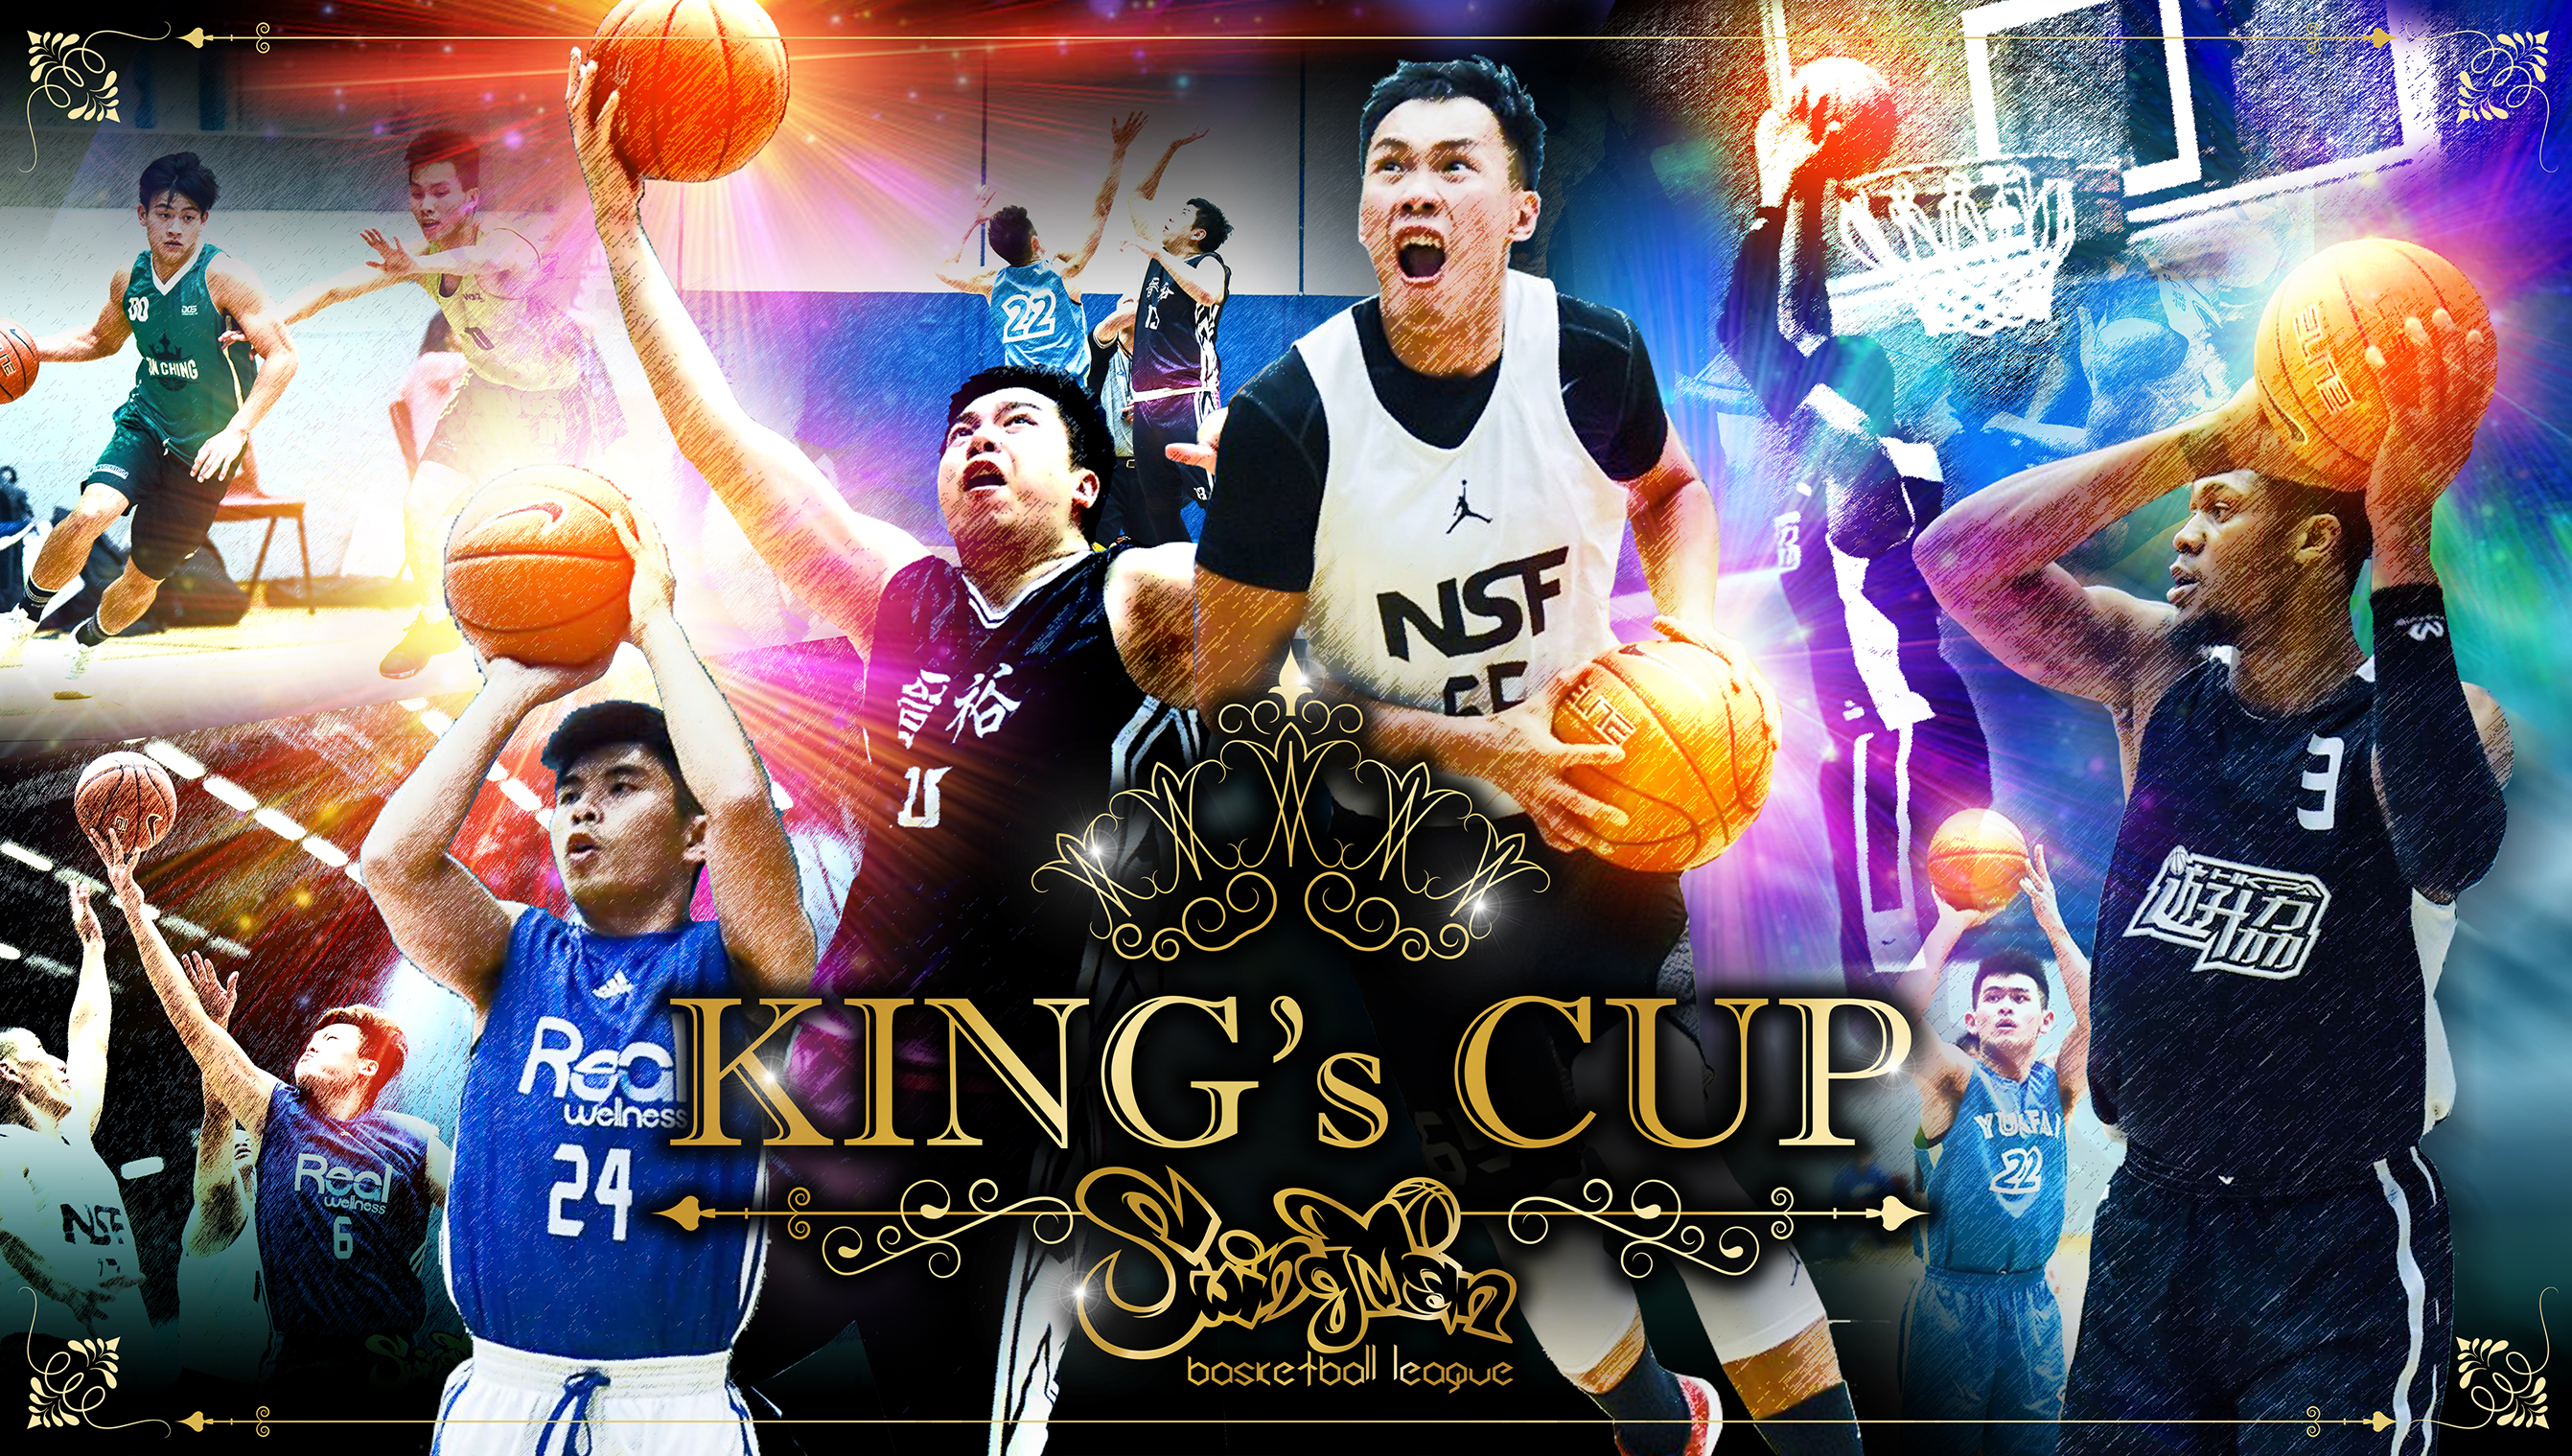 SwingMan King's Cup